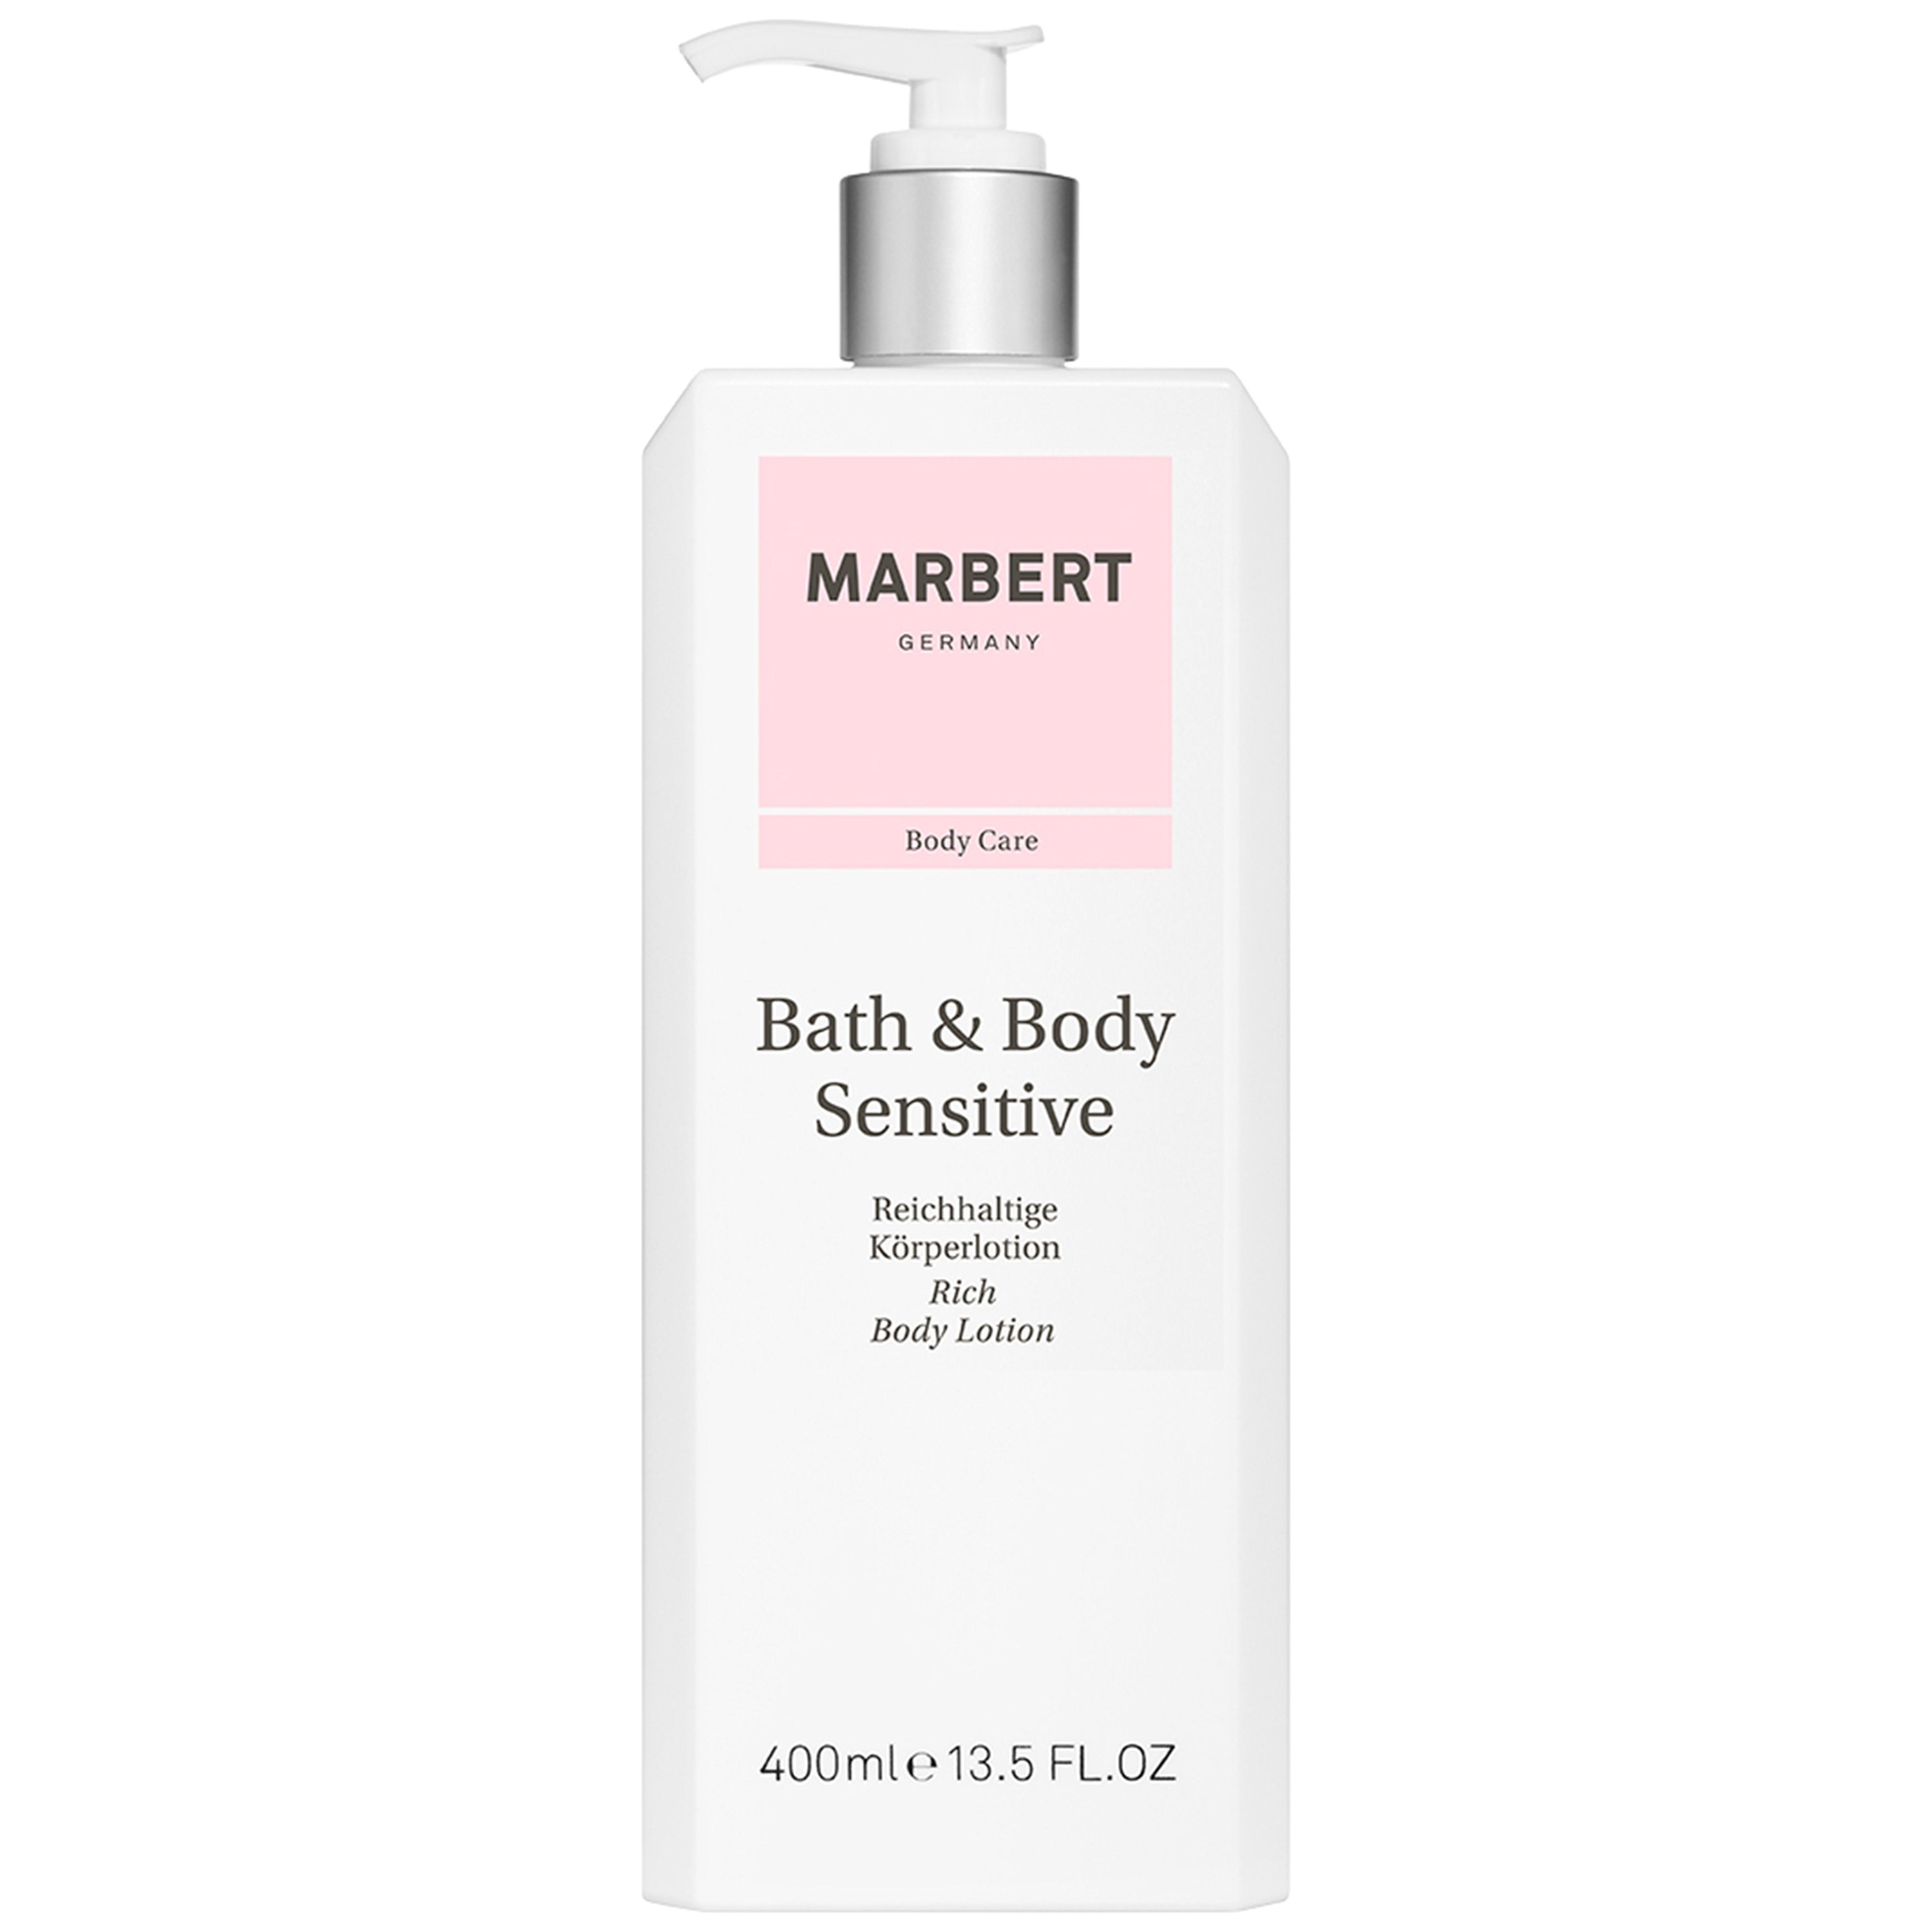 Marbert - Bath & Body Sensitive - Reichhaltige Körperlotion